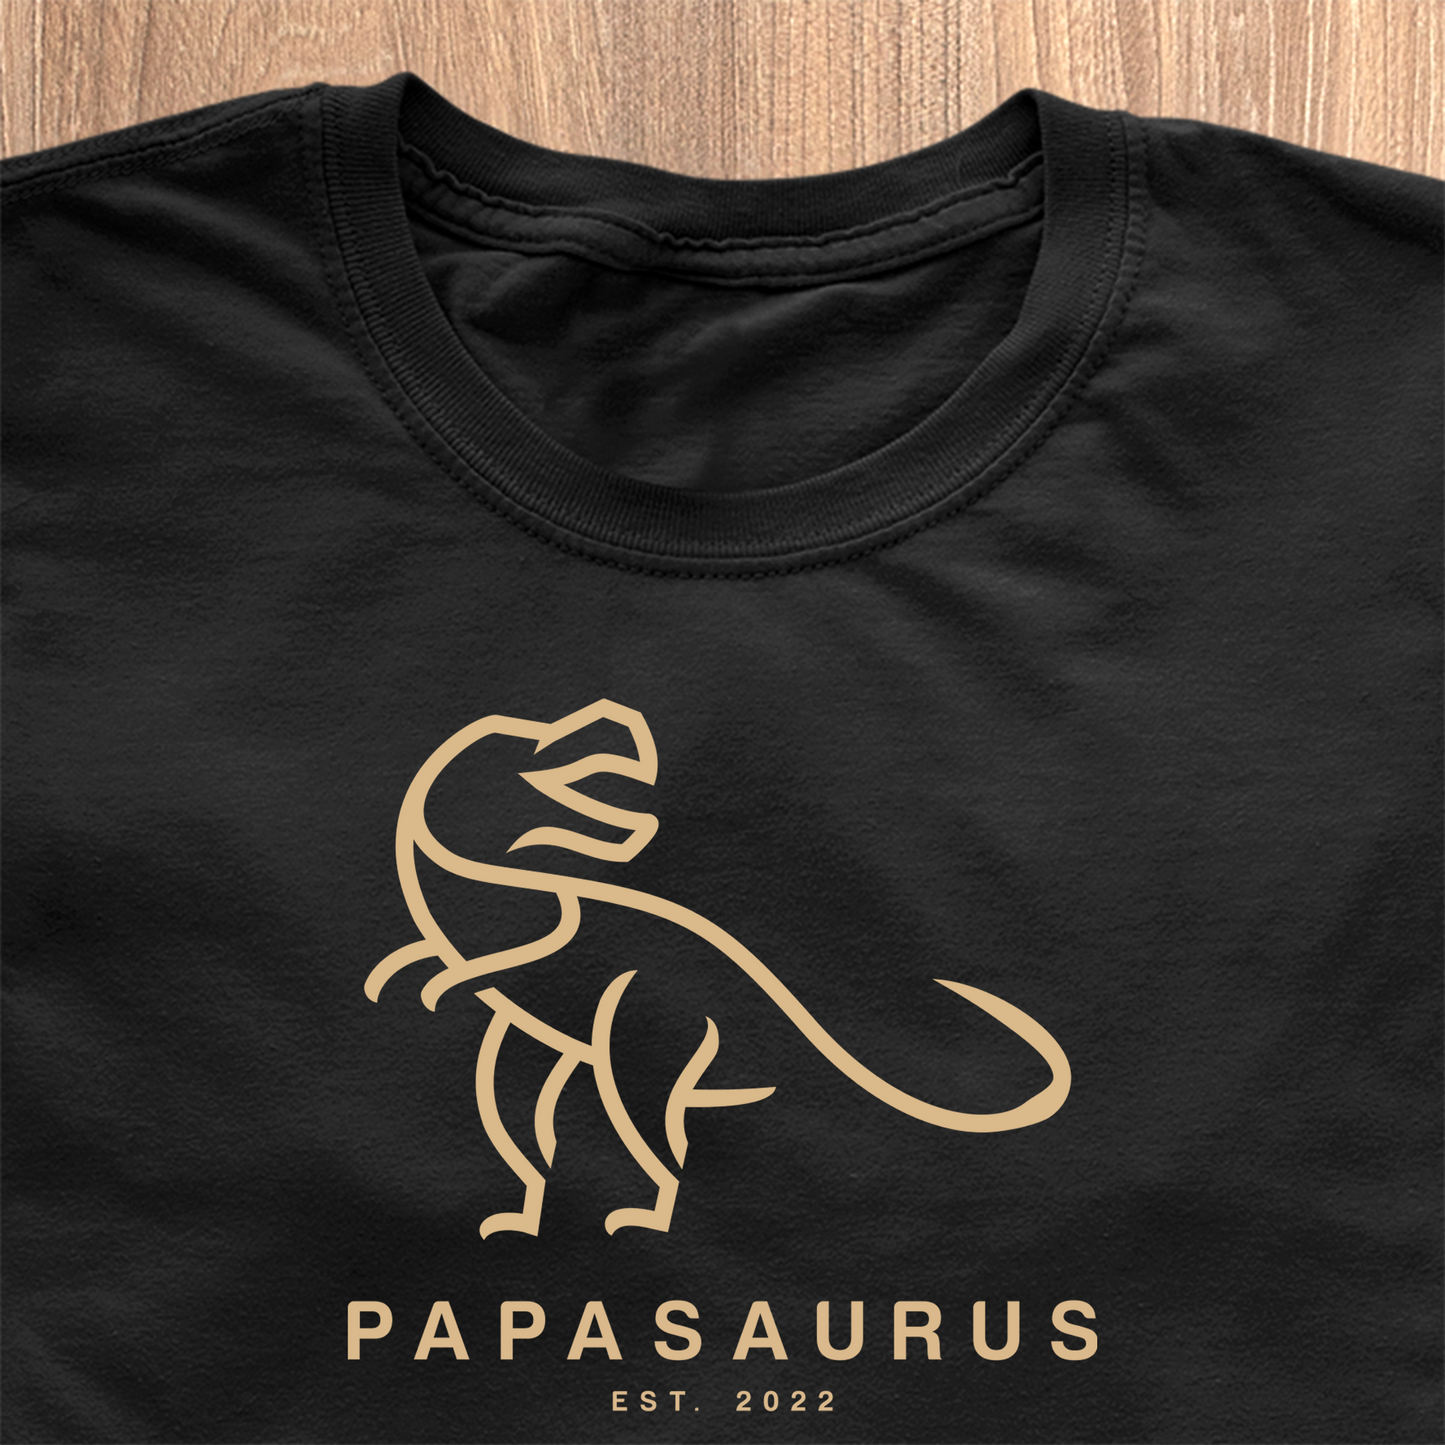 Papasaurus T-Shirt - Dato, der kan tilpasses